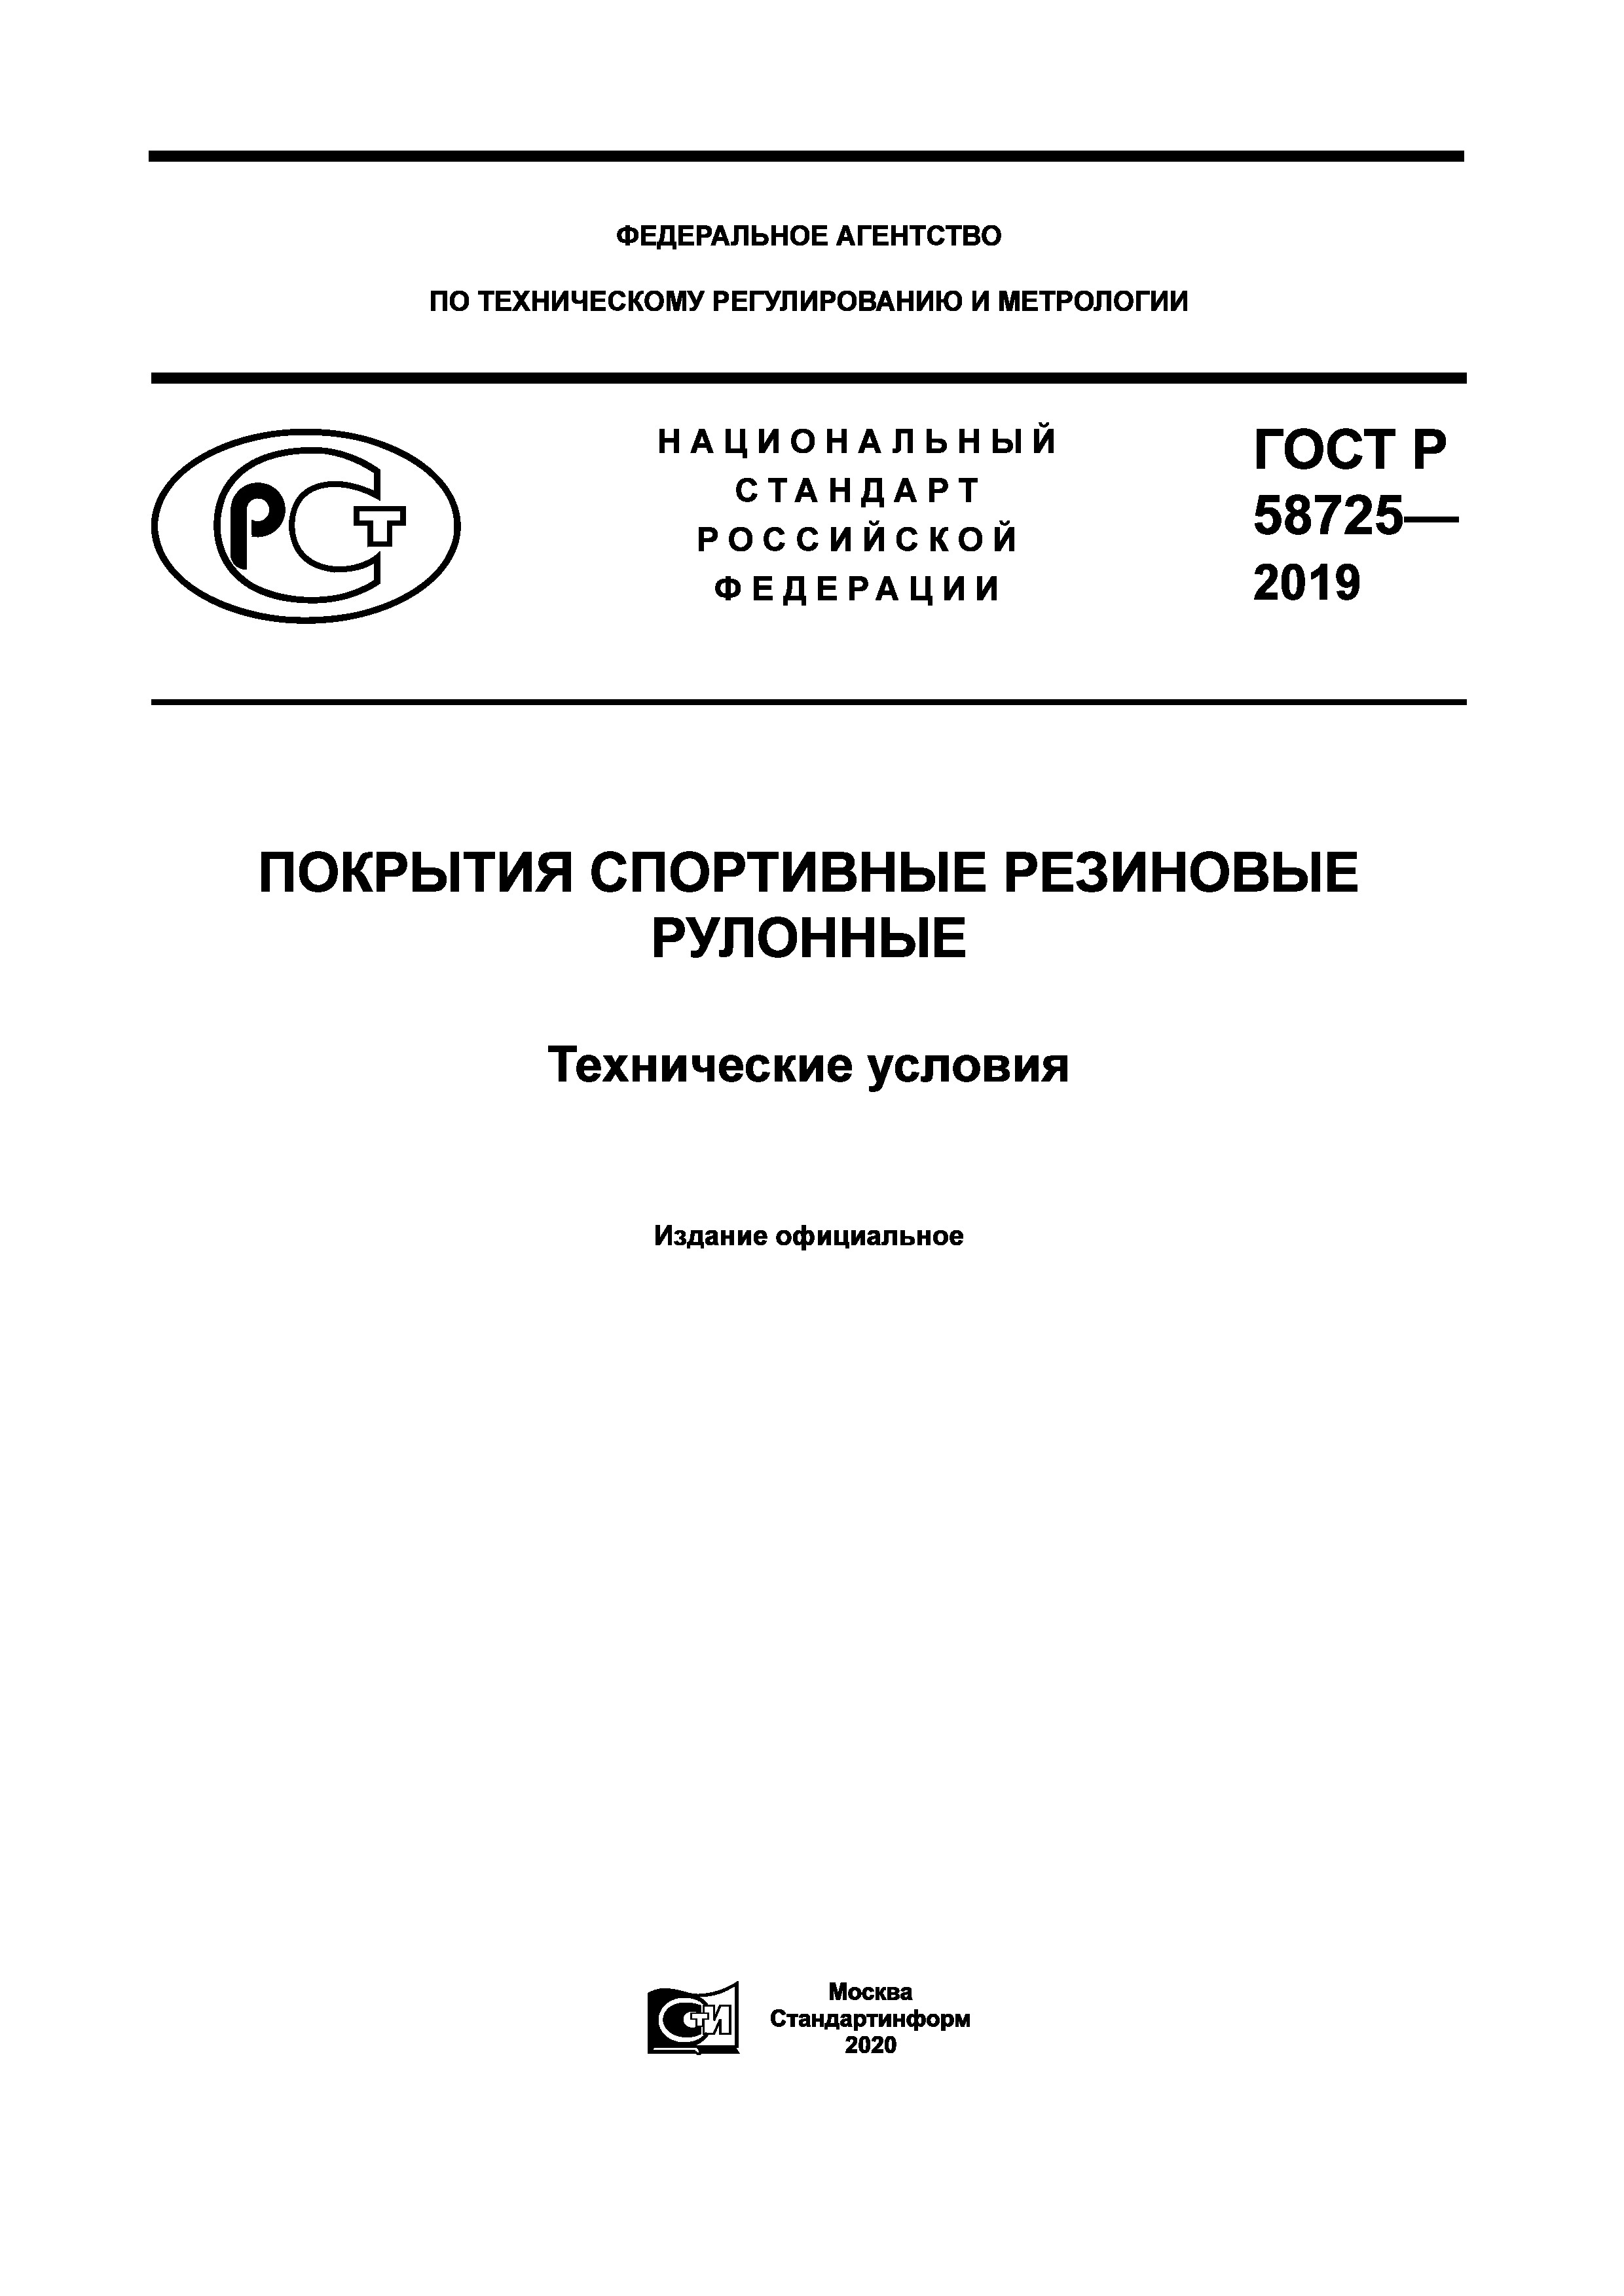 ГОСТ Р 58725-2019